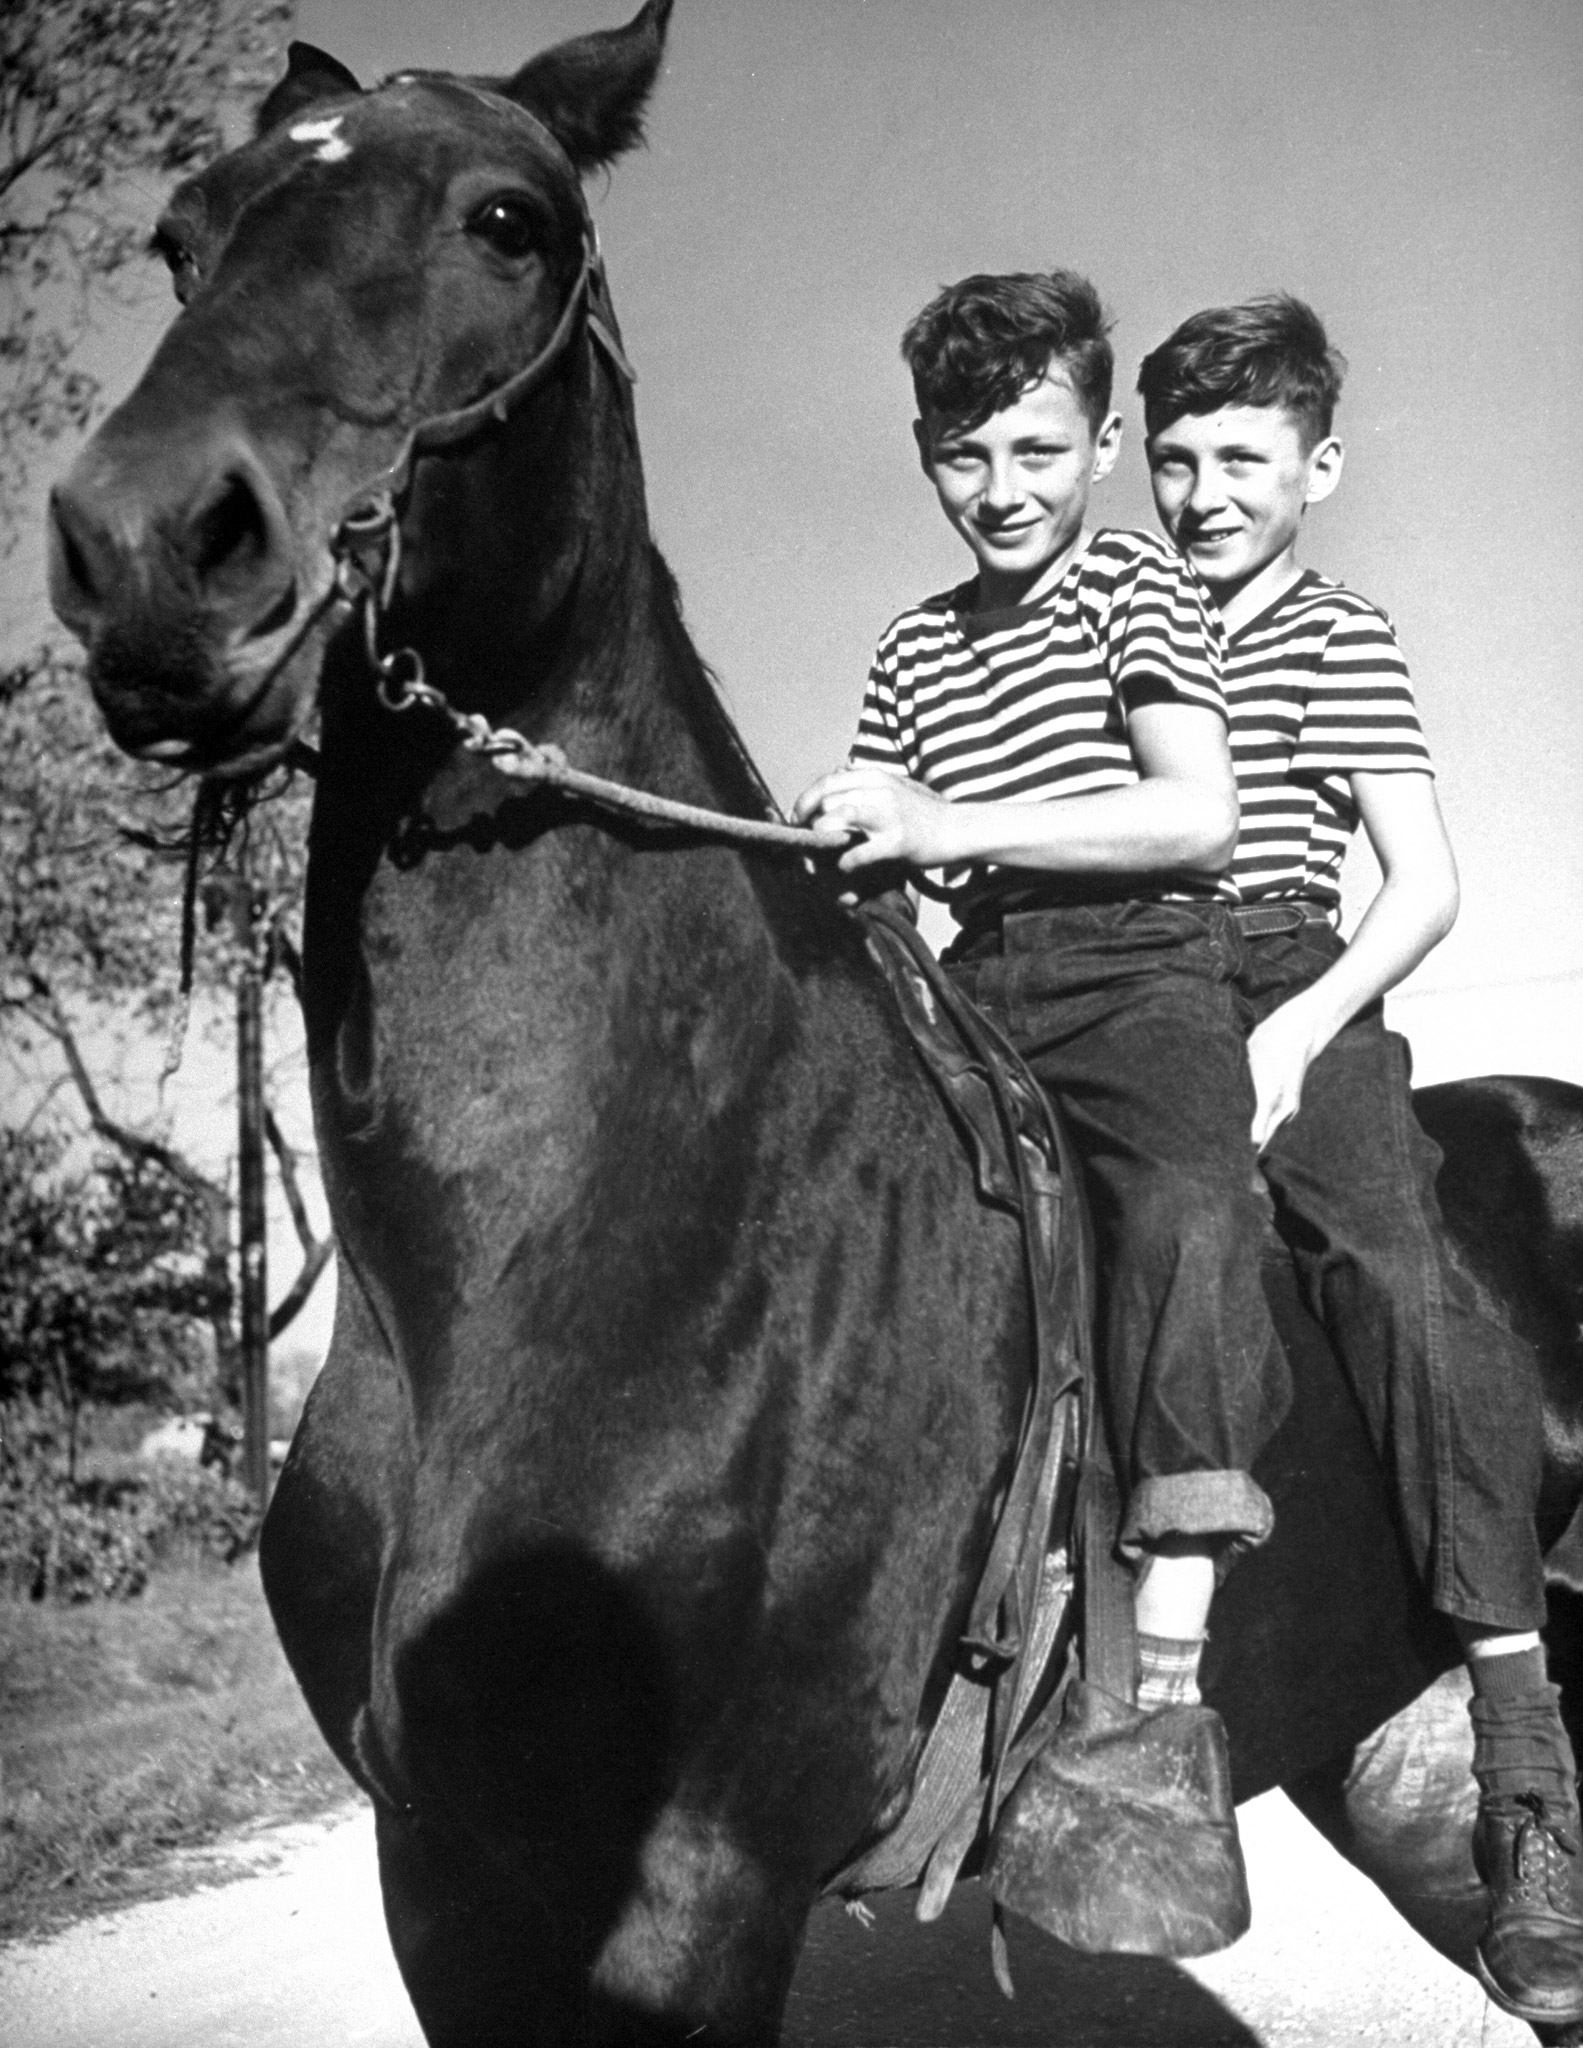 Boys riding a horse to schools, 1946.